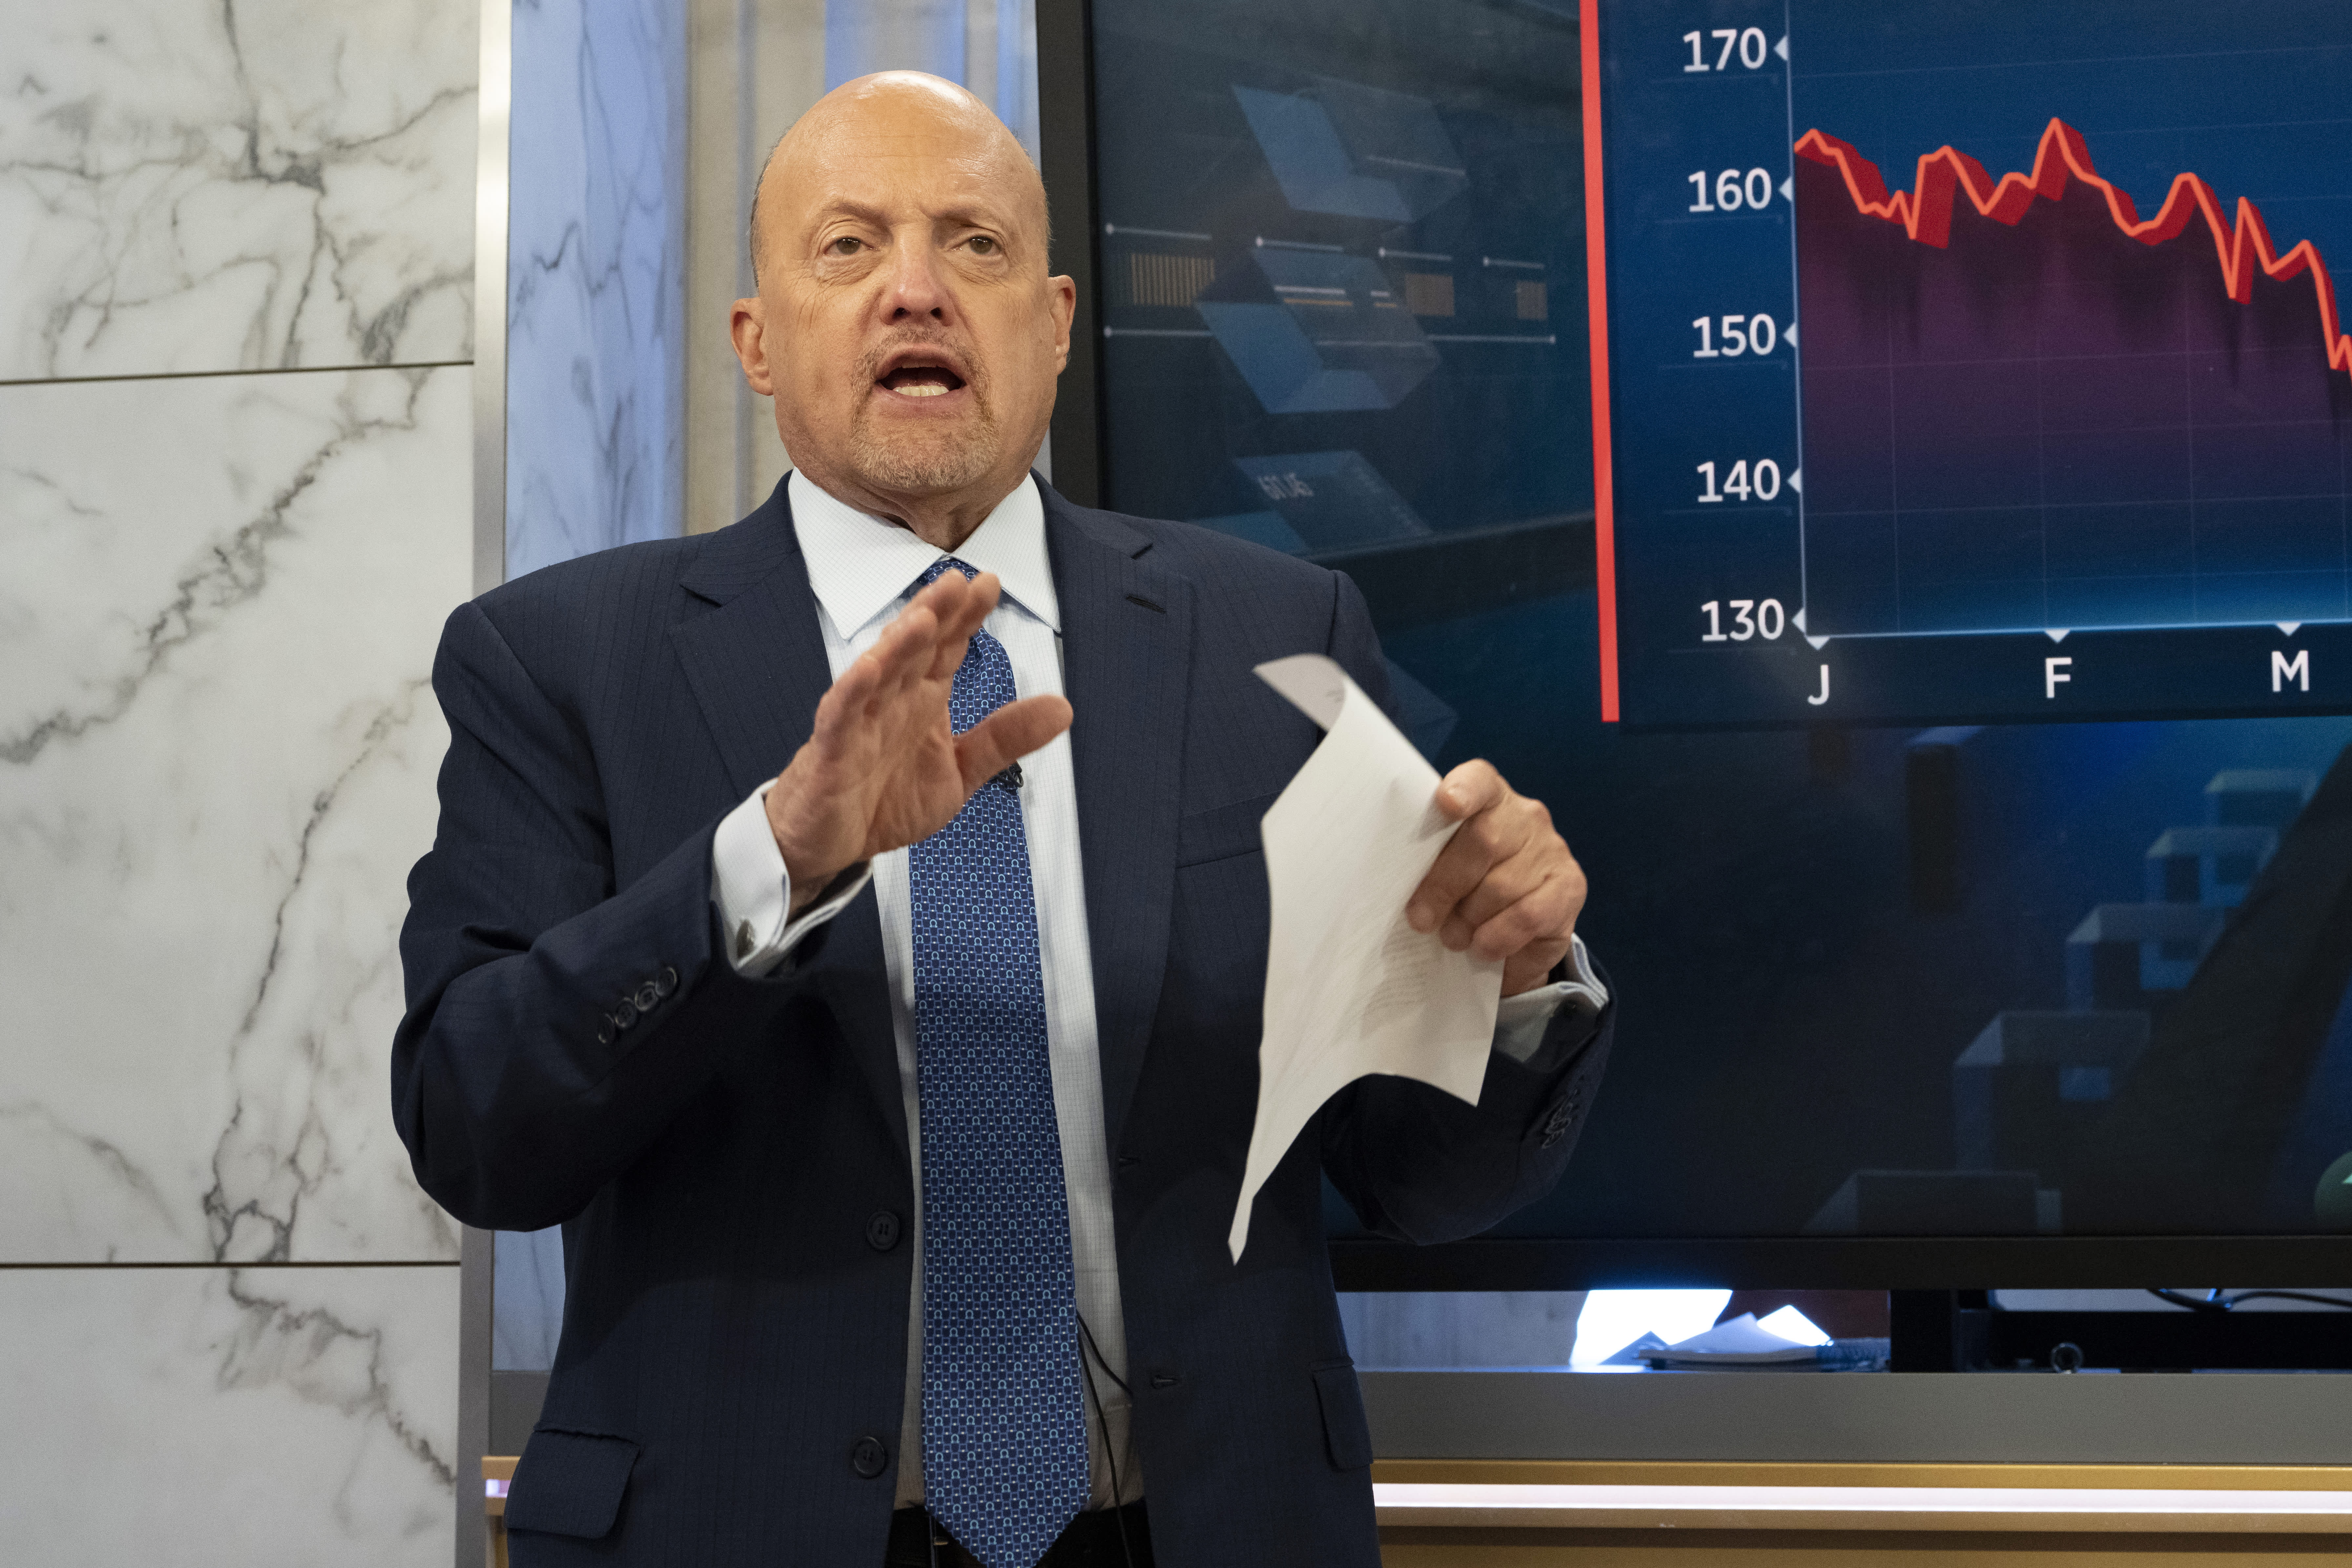 Jim Cramer's Investing Club meeting Thursday: Stocks fall, Cisco, Palo Alto Networks